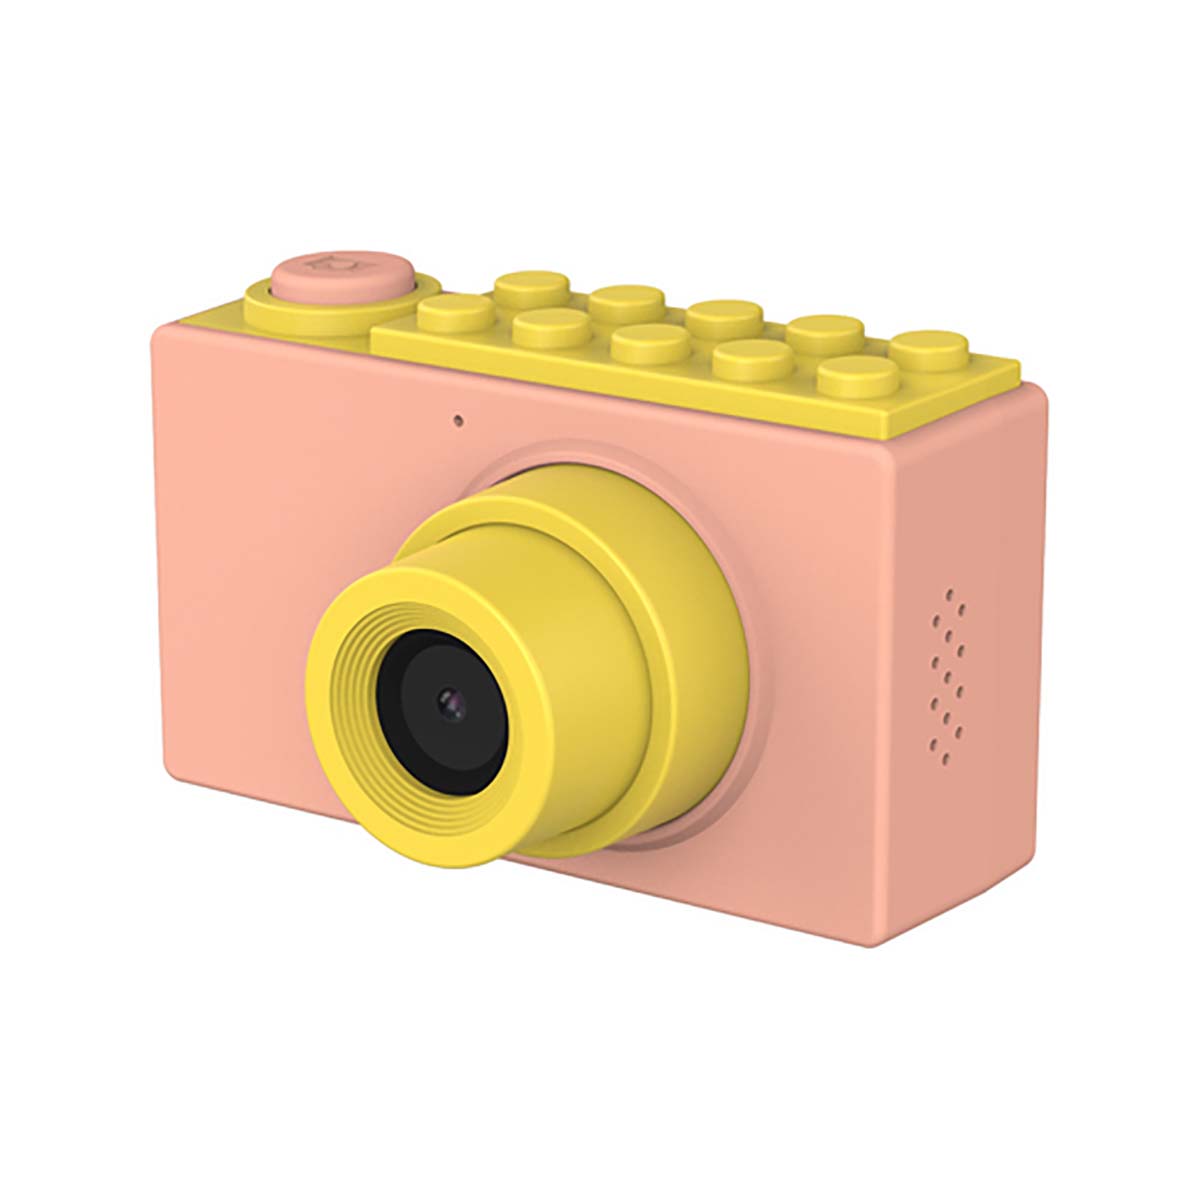 MyFirst Camera 2 Pink inkl.16 GB microSD Speicherkarte und Kartenadapter